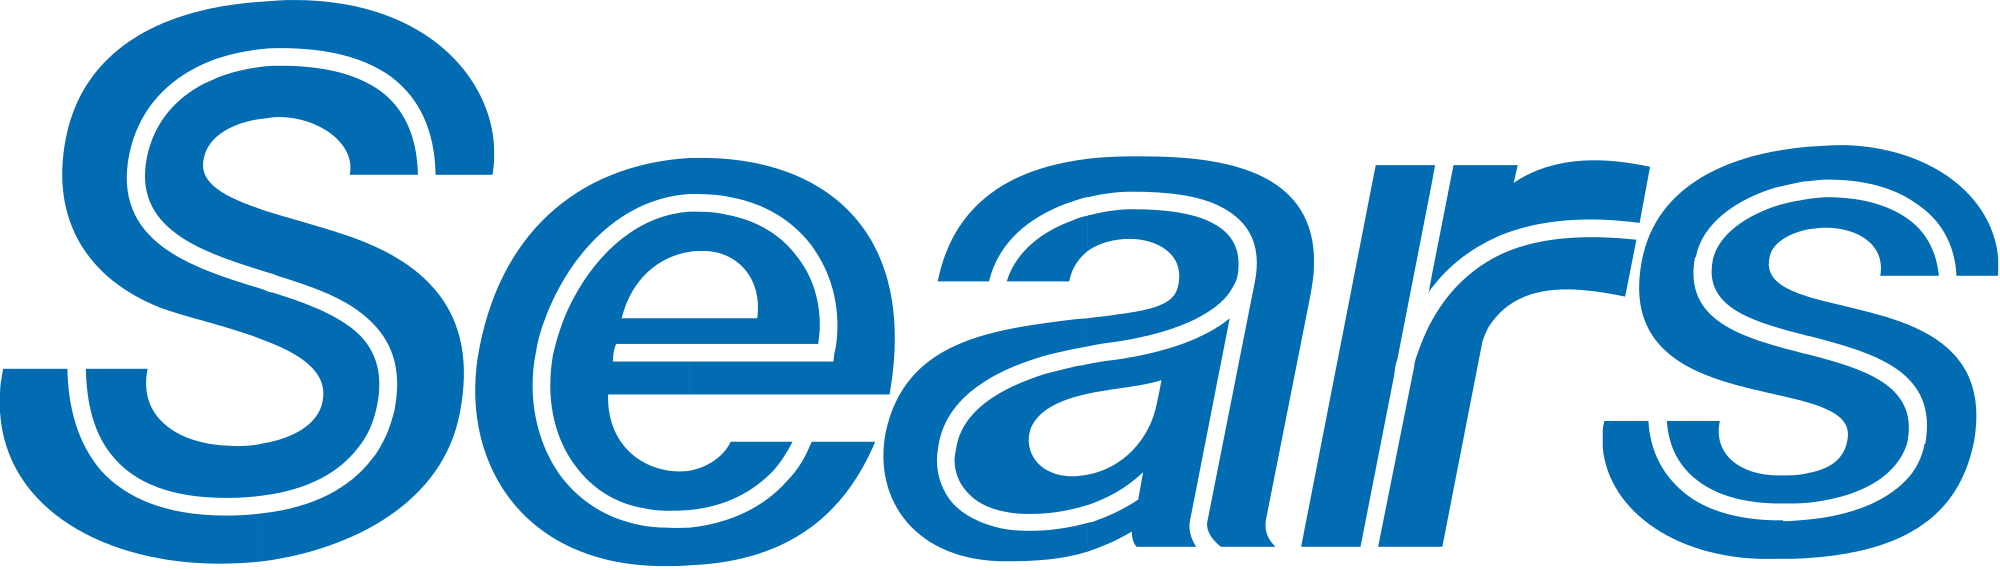 Sears.com Logo - Sears Logo Vector Free Download